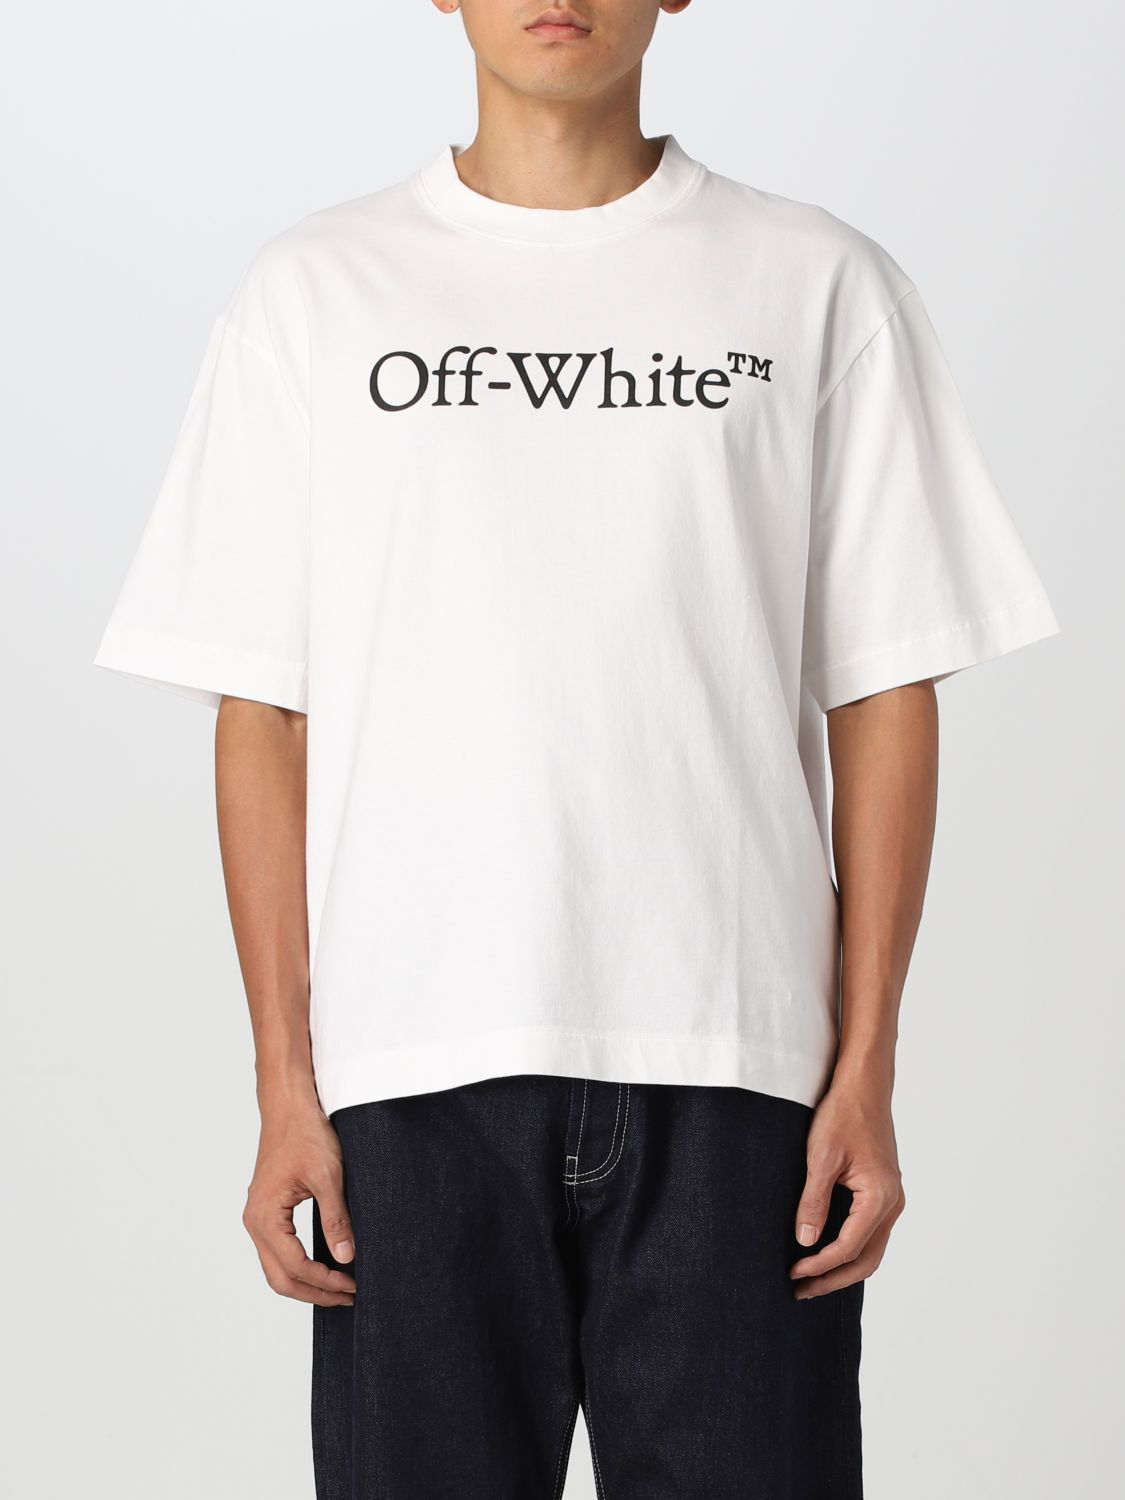 Off-White T-Shirts & Vests for Men